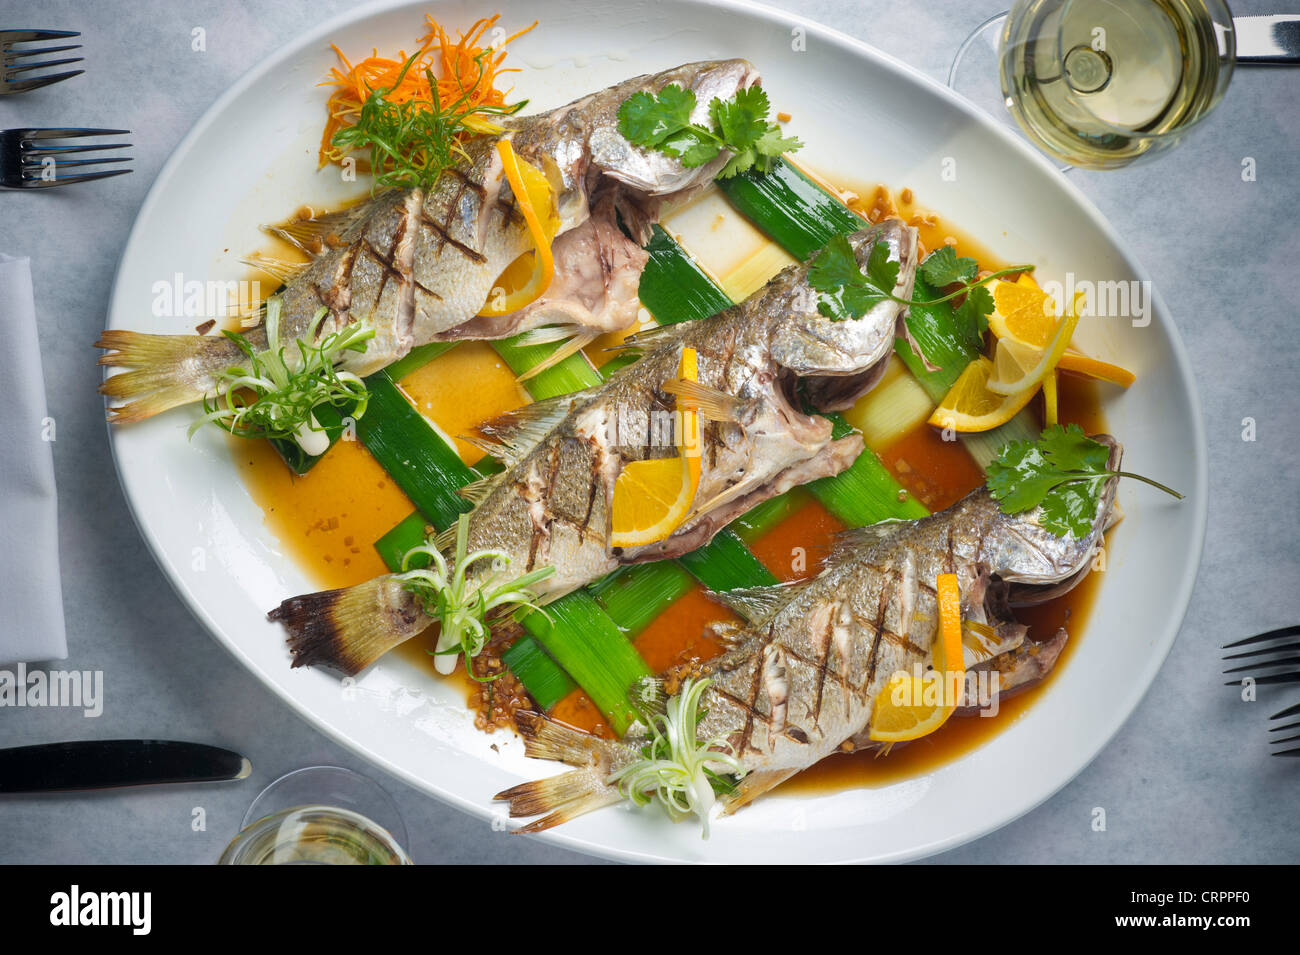 Seafood dish - fish on plate Stock Photo